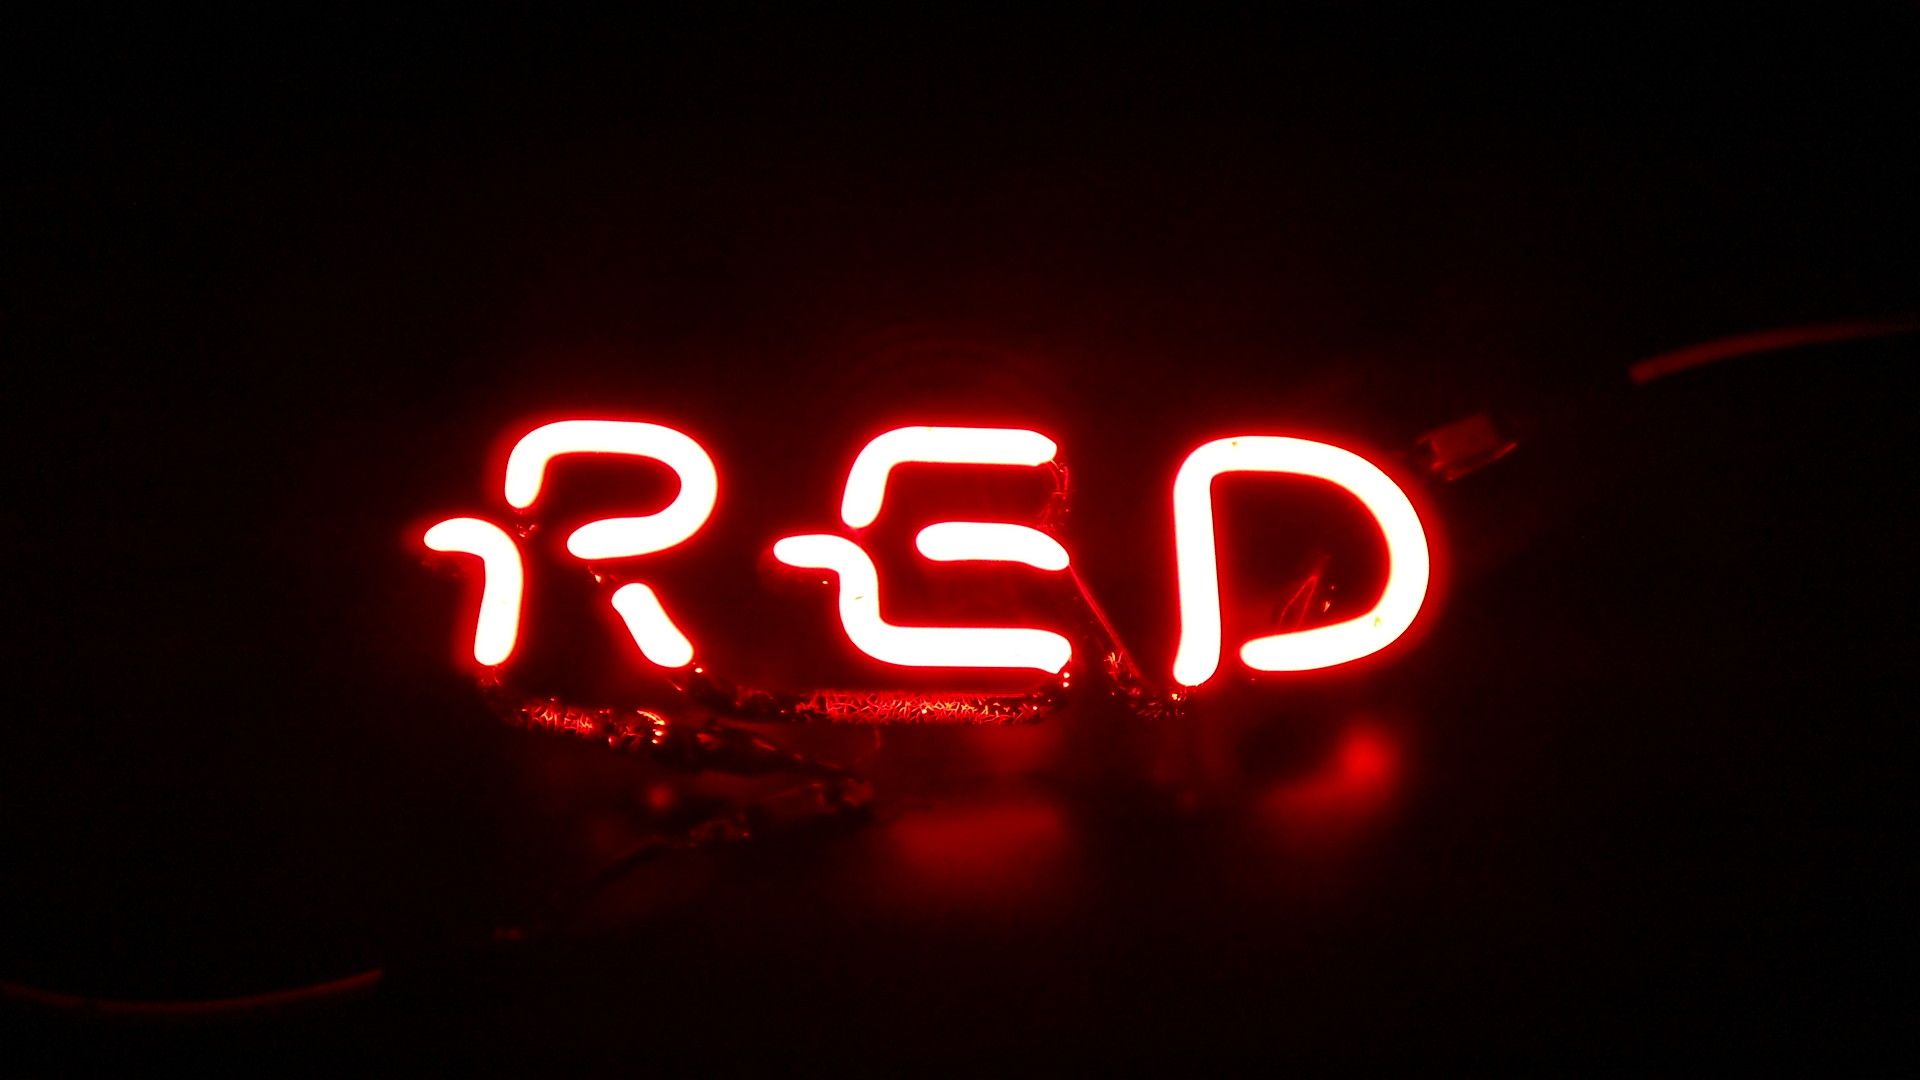 Red Neon Aesthetic HD Wallpaper